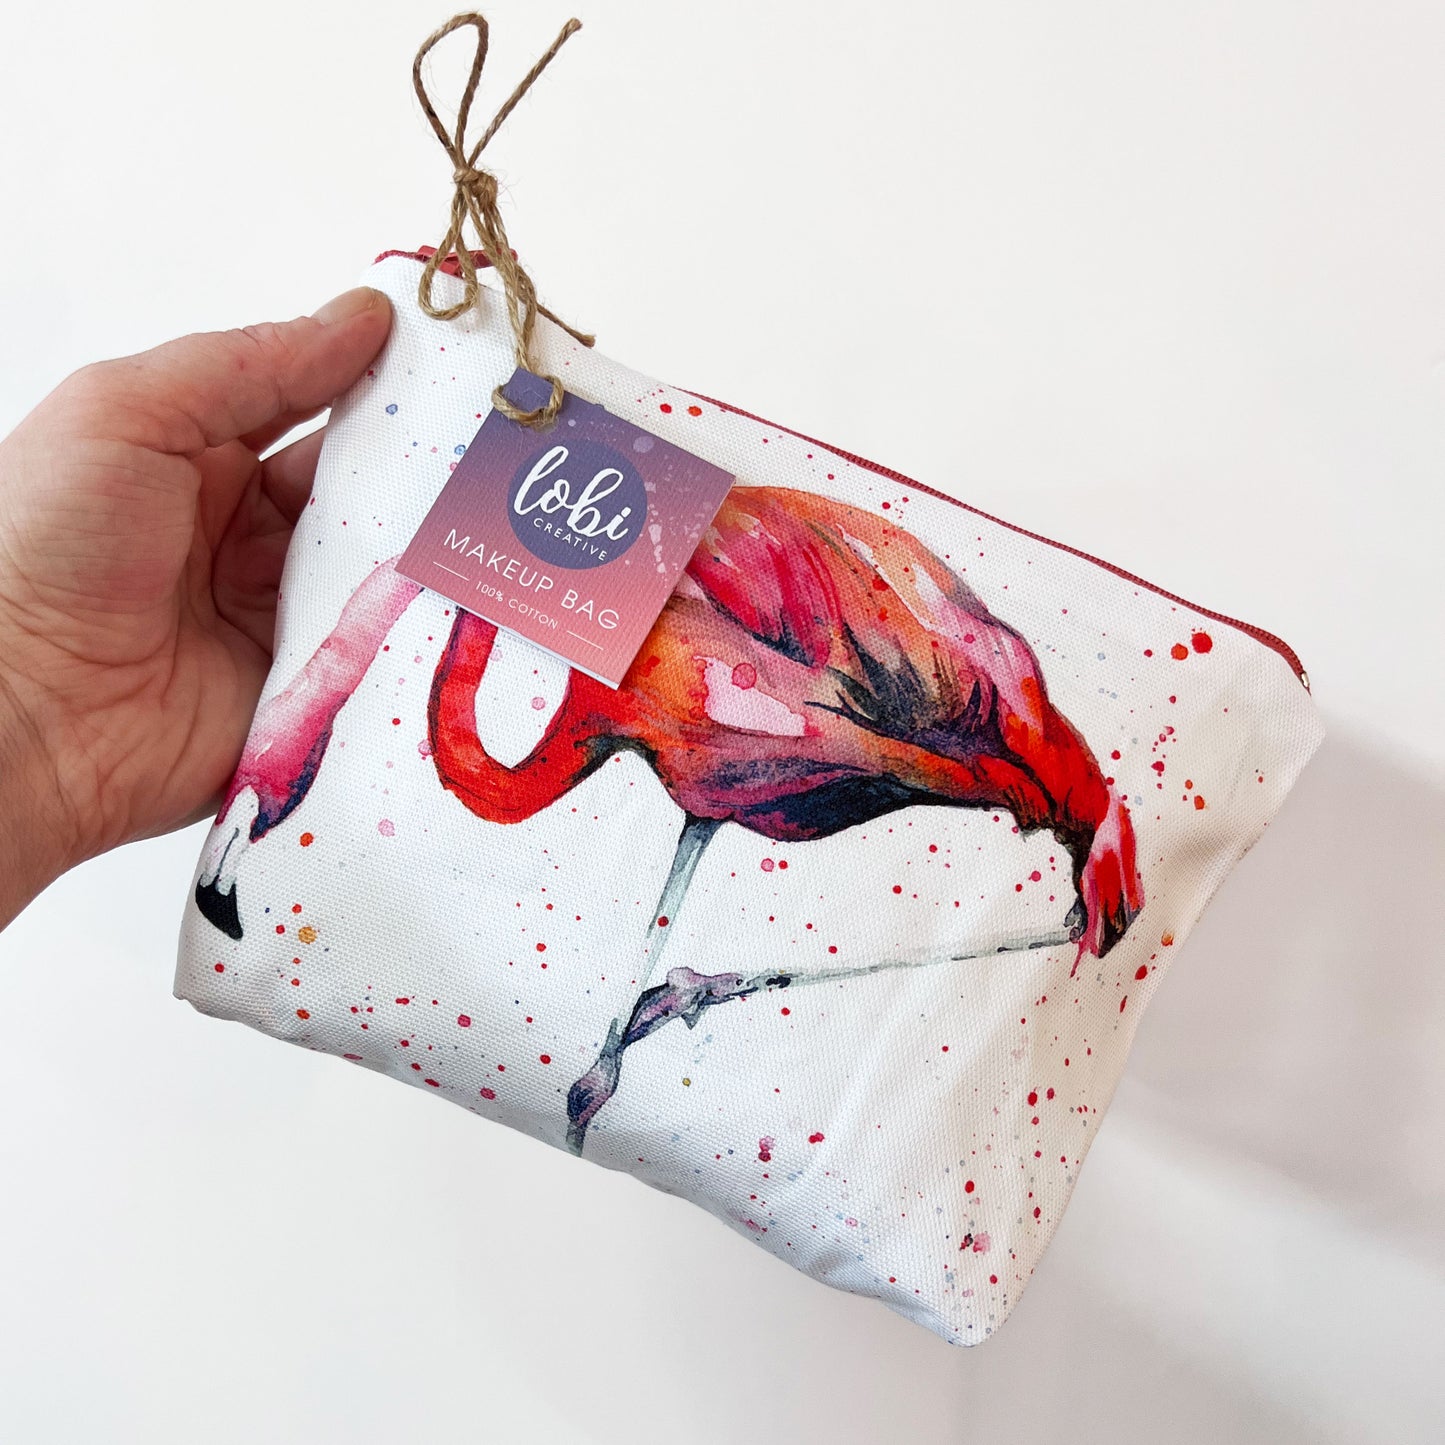 Watercolour Flamingo Cotton Makeup Bag